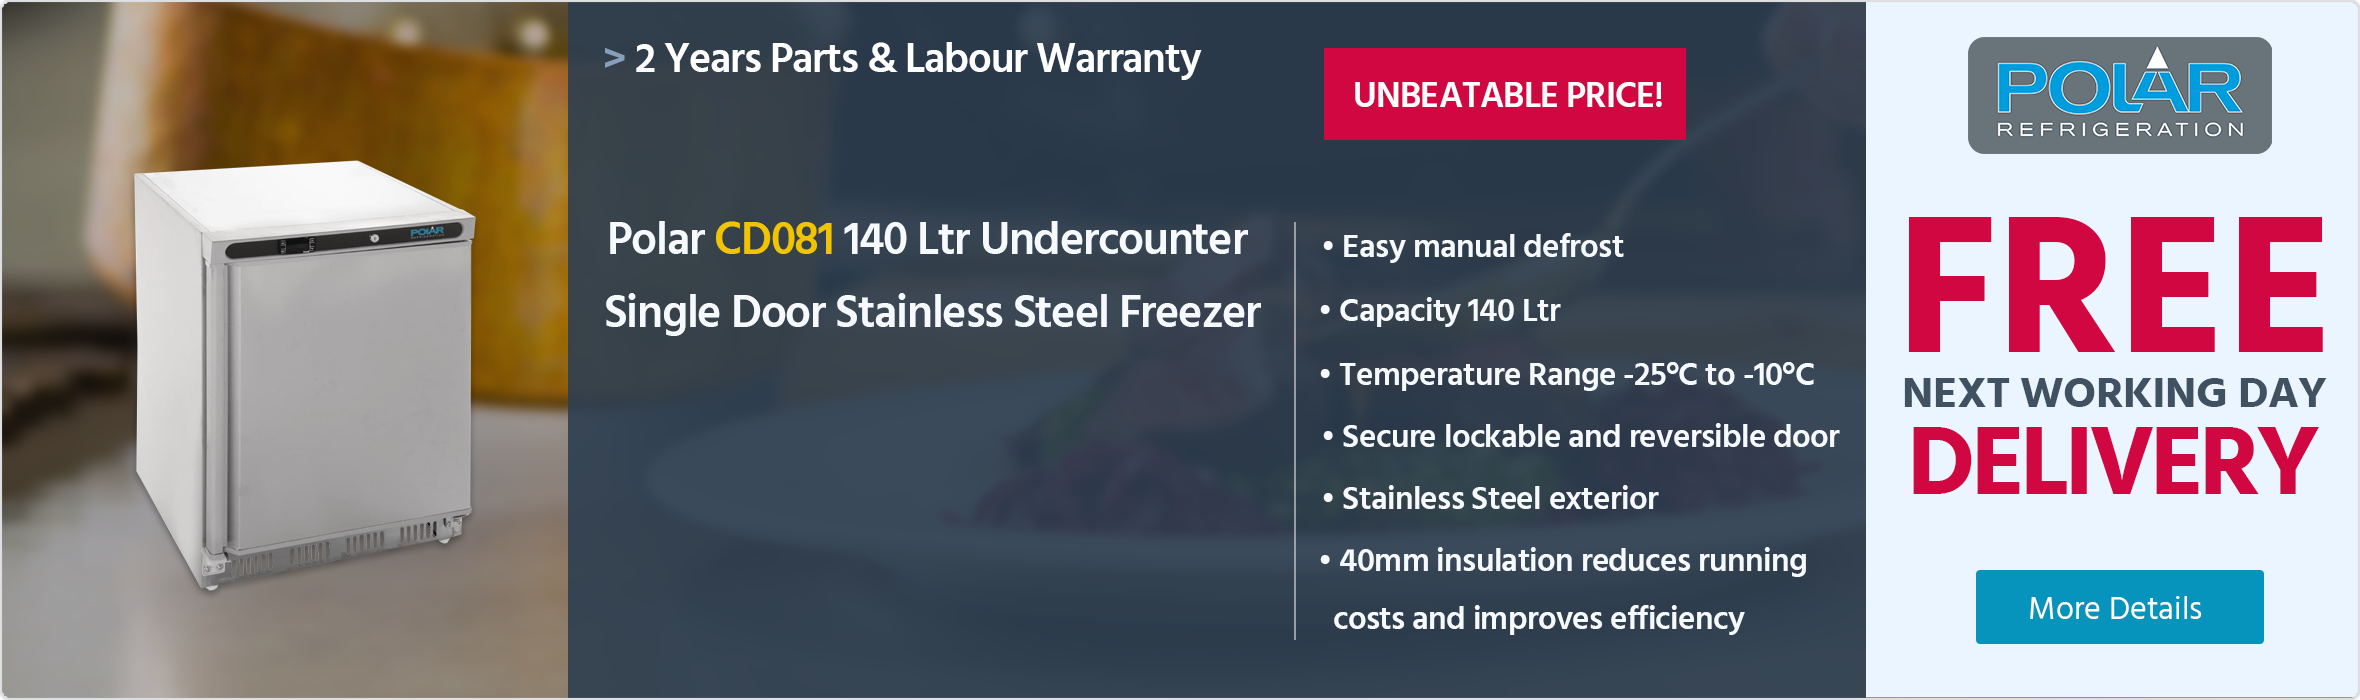 Polar C-Series CD081 140 Ltr Undercounter Single Door Stainless Steel Freezer